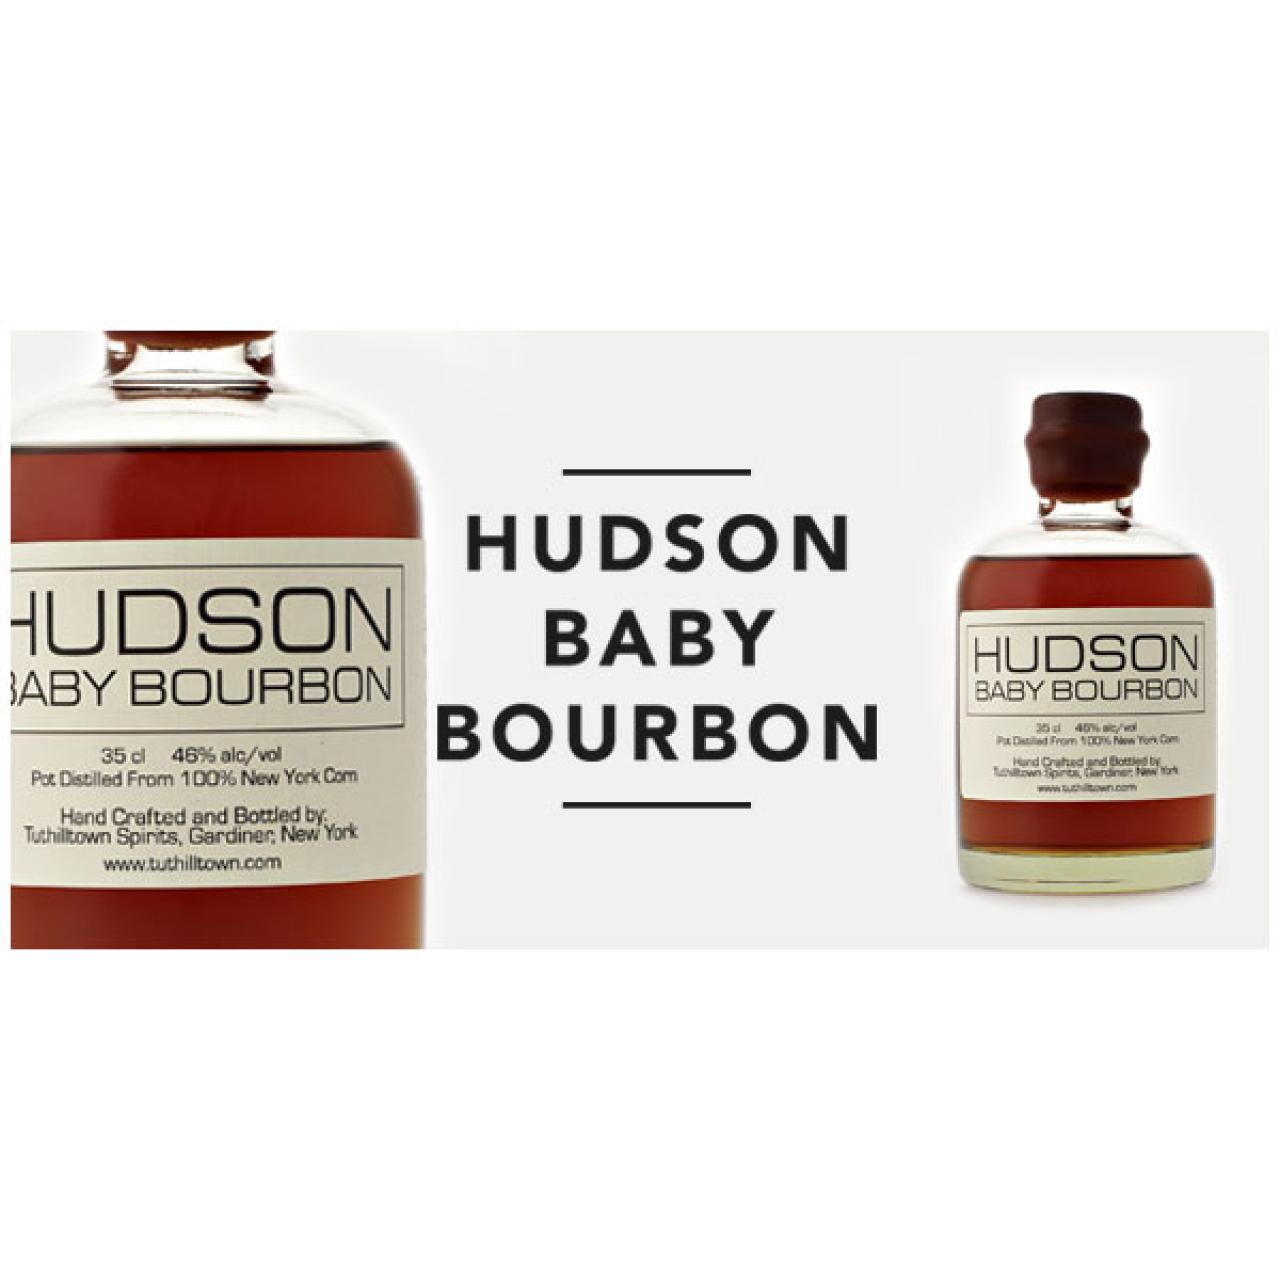 HUDSON BABY BOURBON 46% 35 CL 